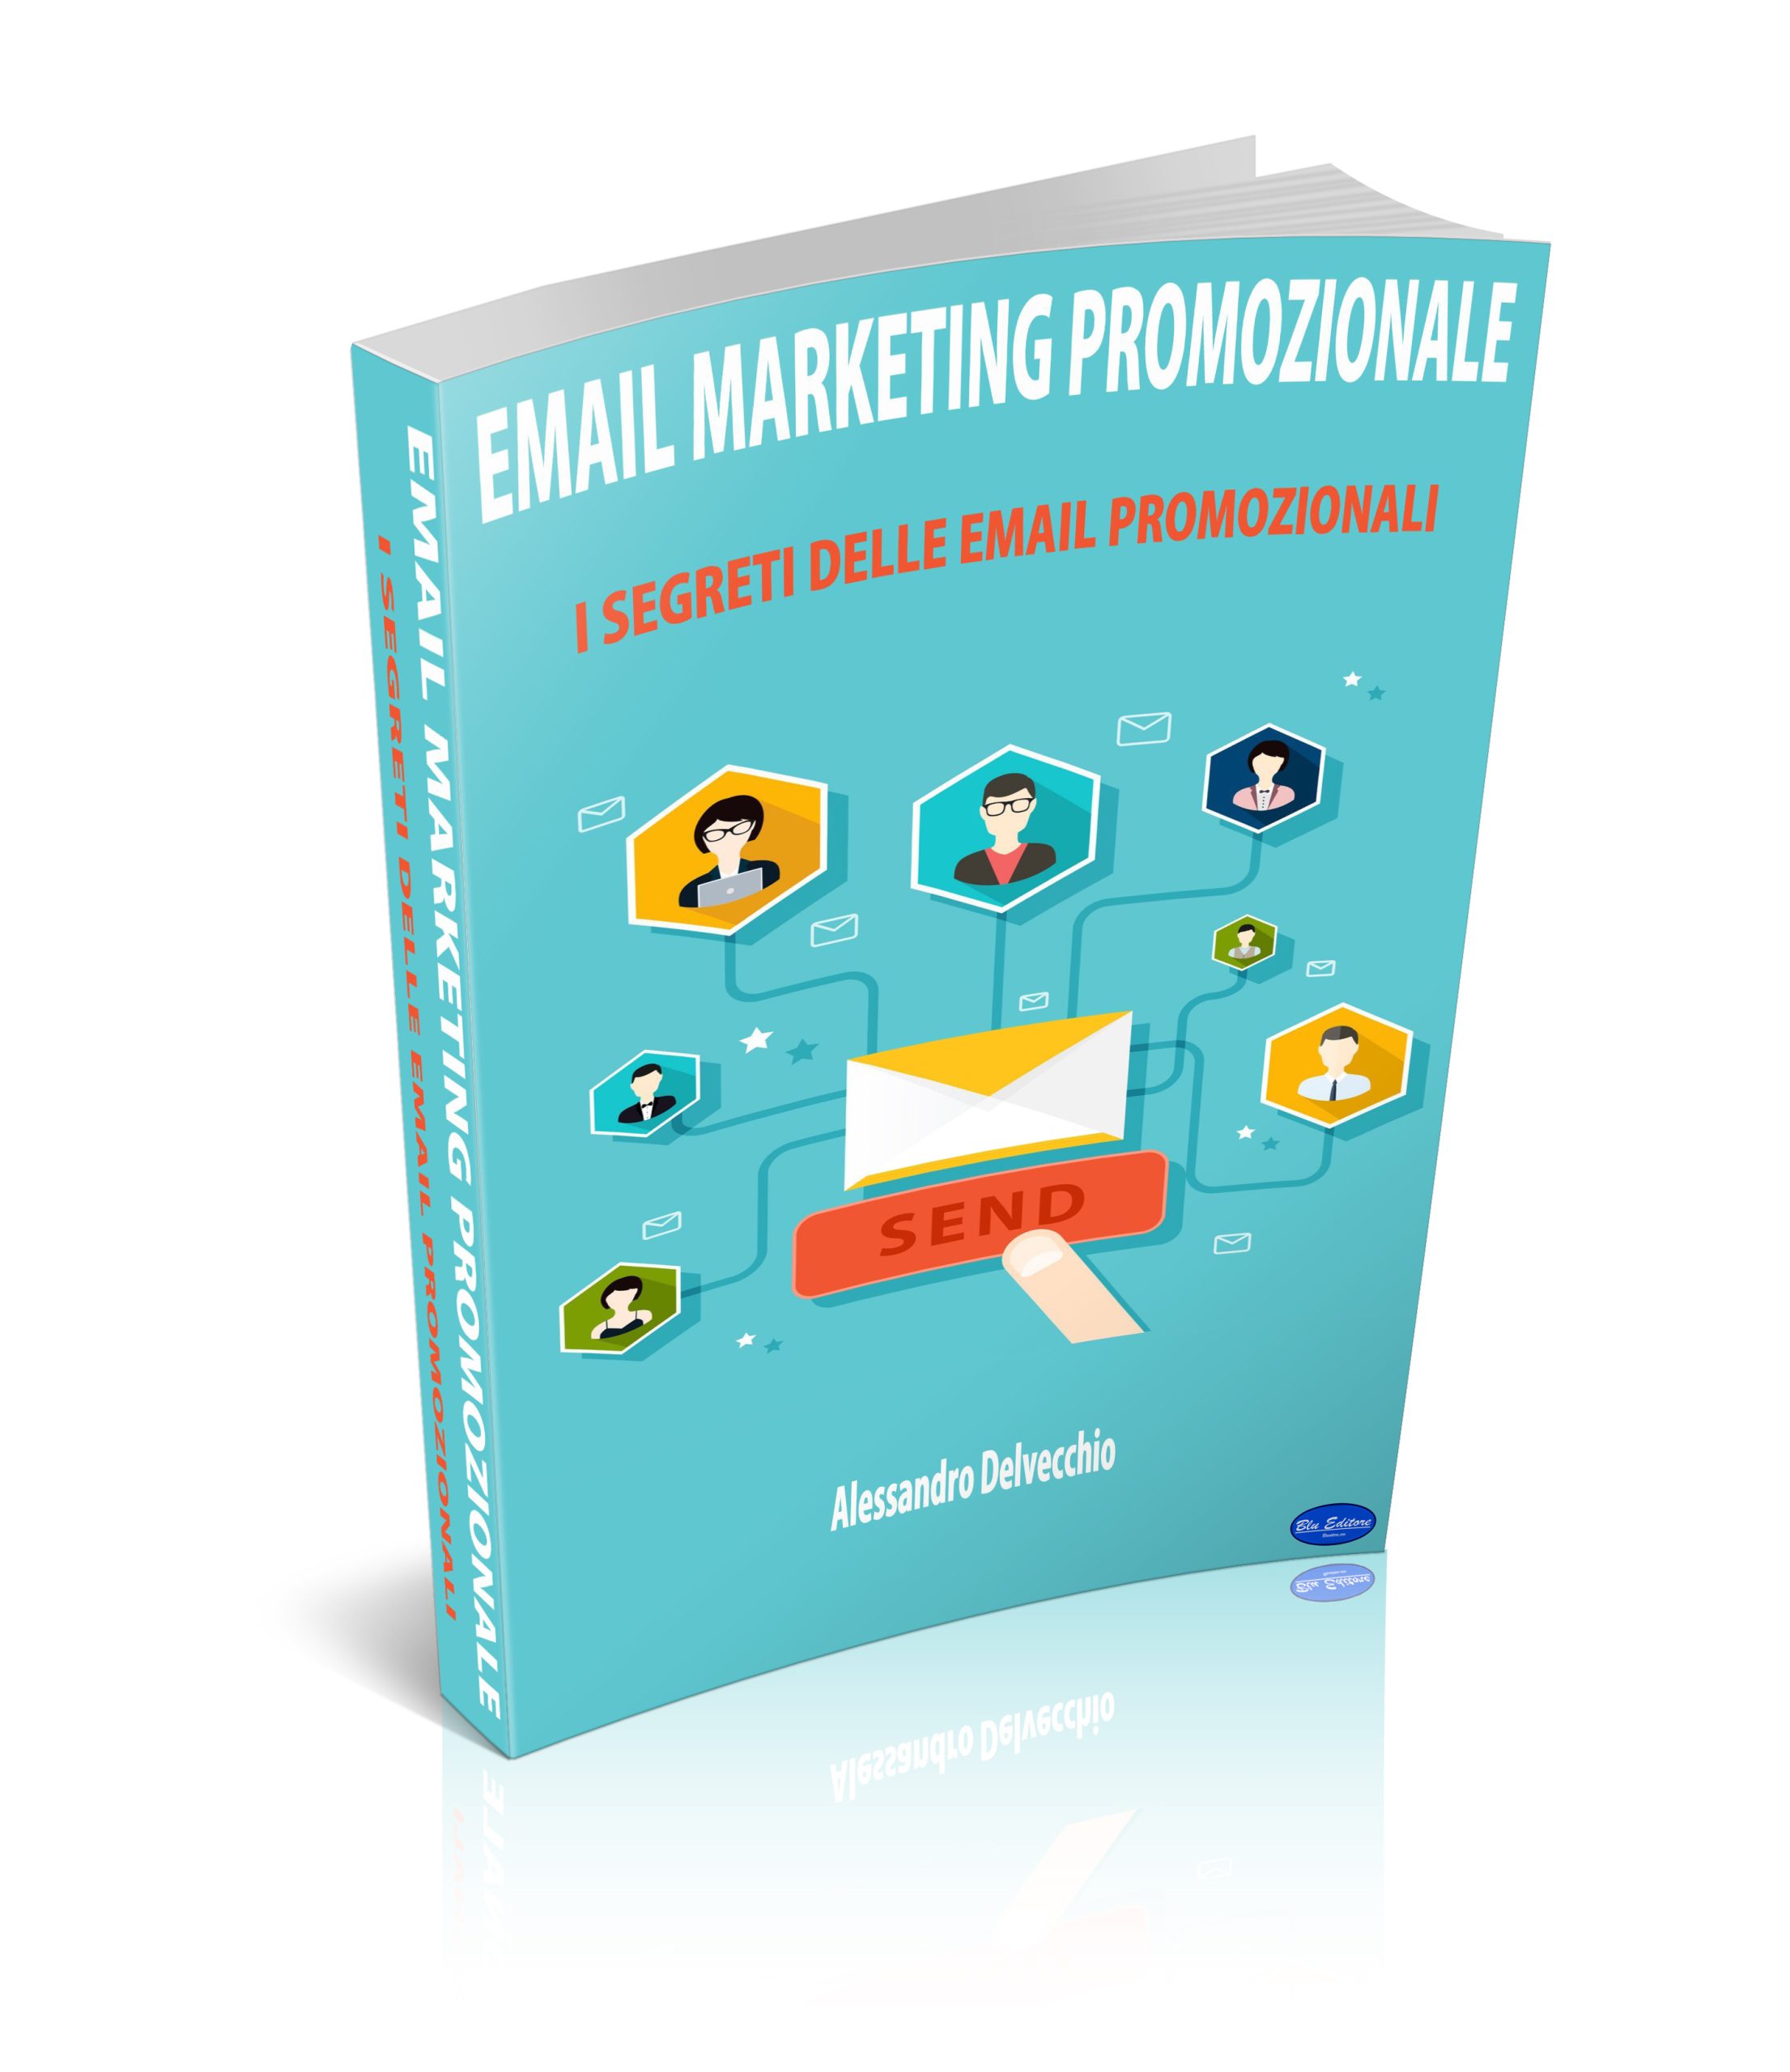 Email Marketing Promozionale